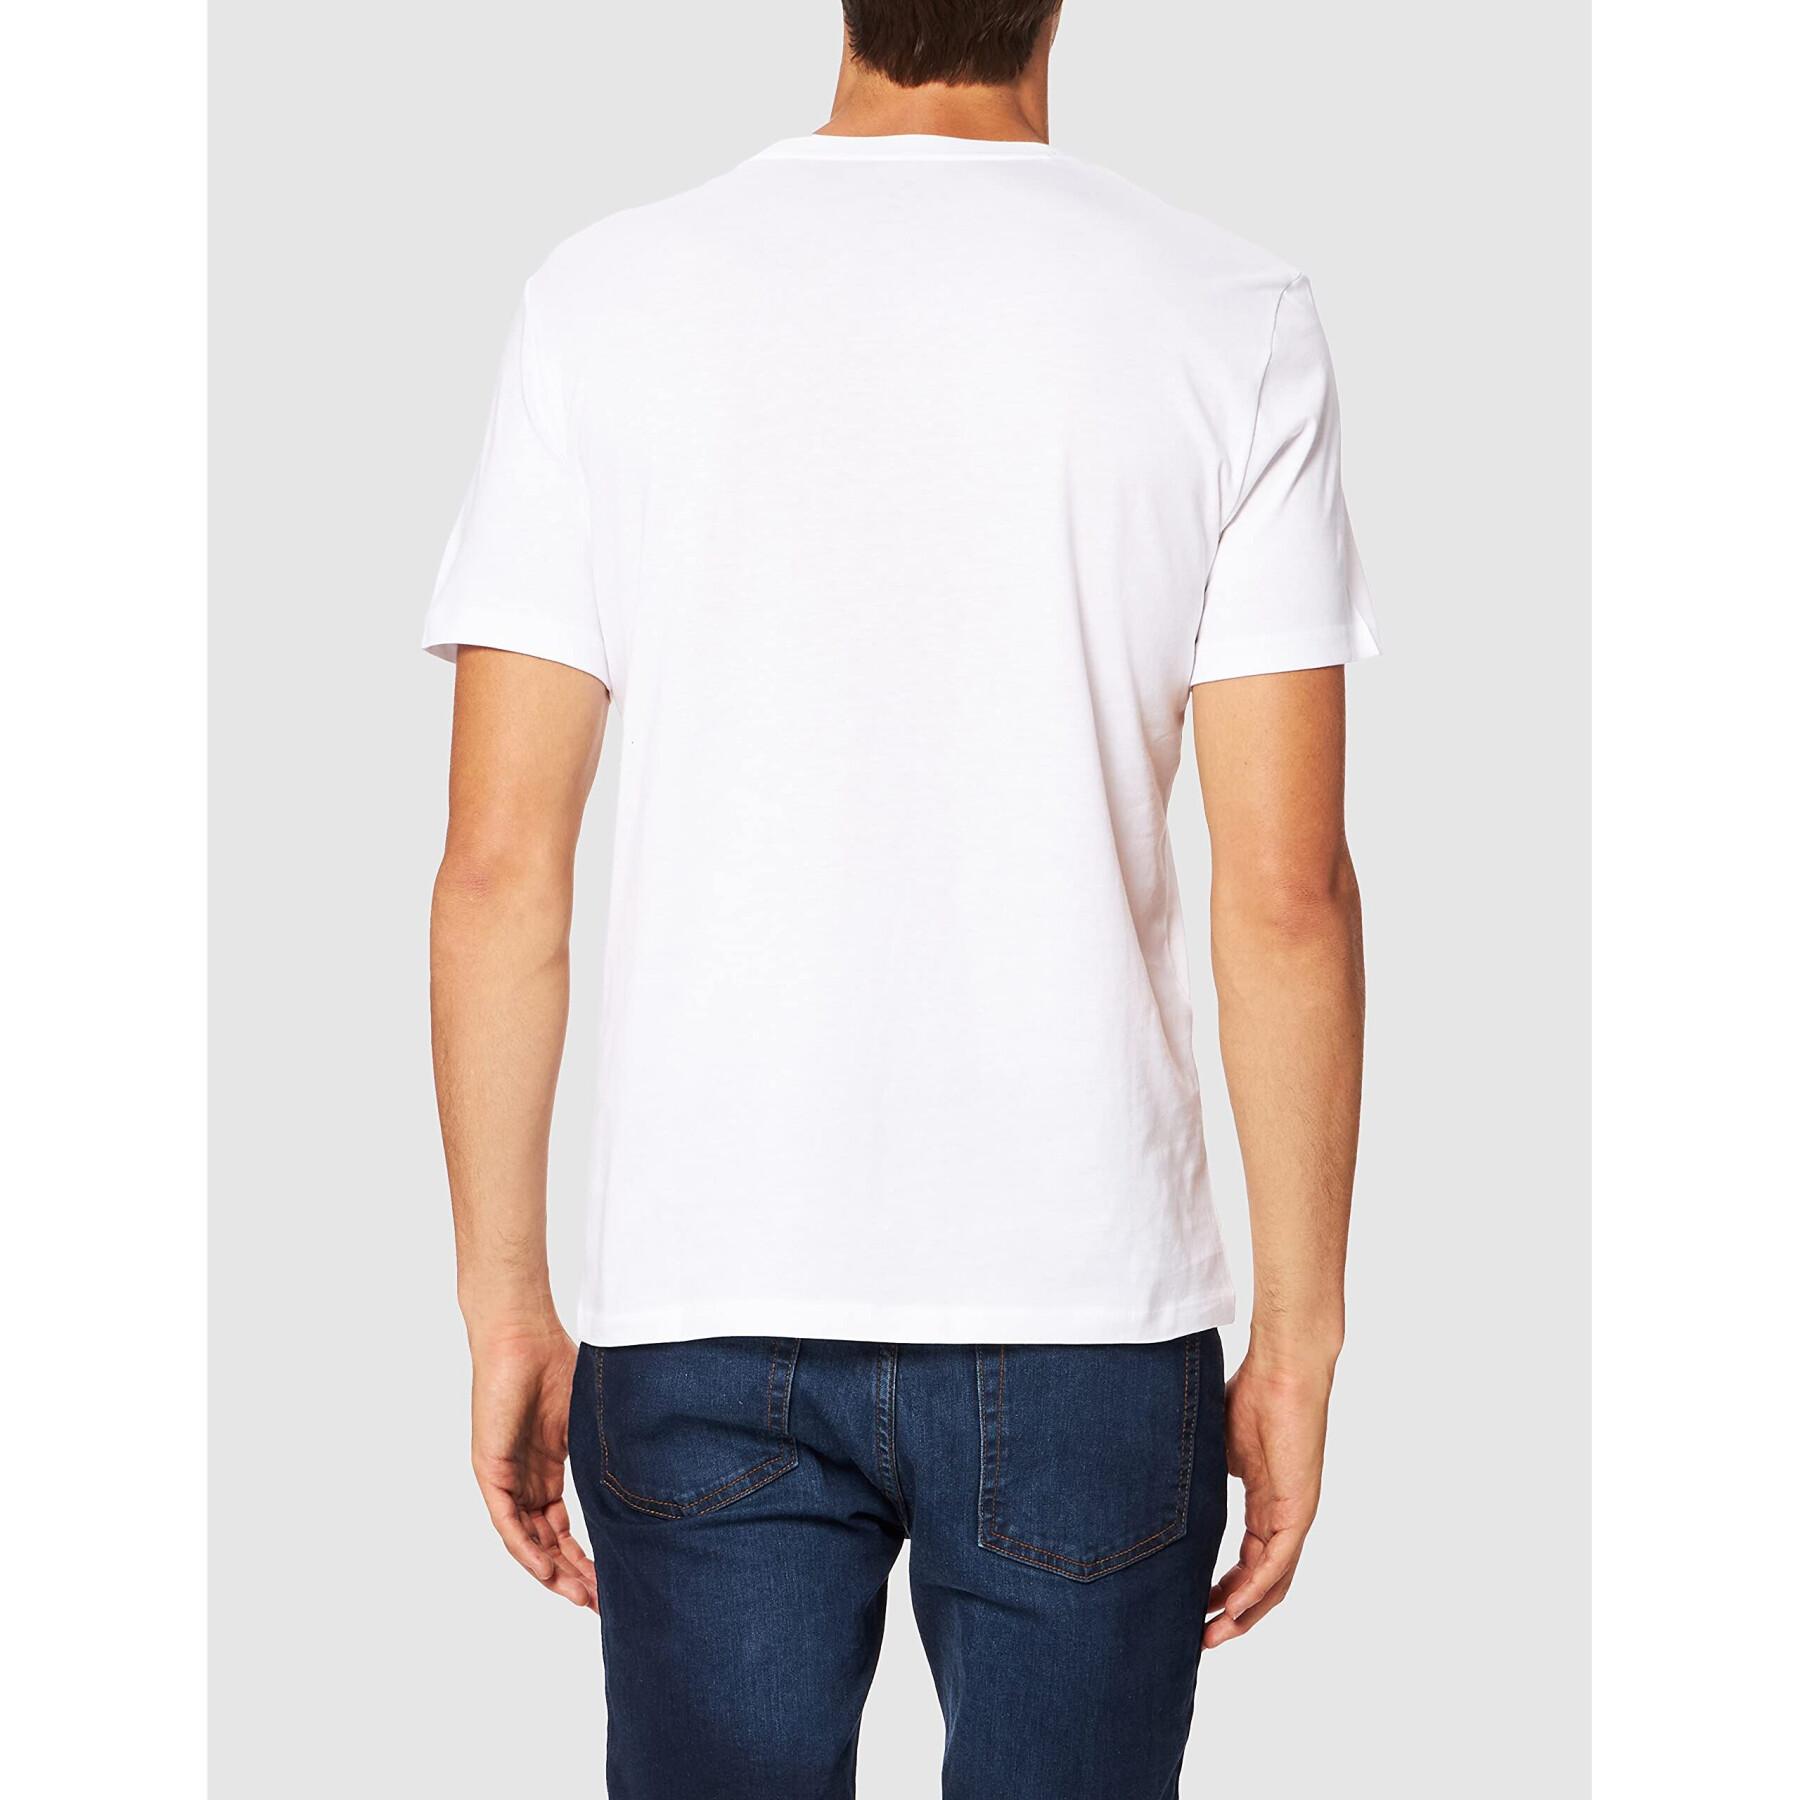 Camiseta Armani exchange 6KZTAH-ZJ5LZ blanco